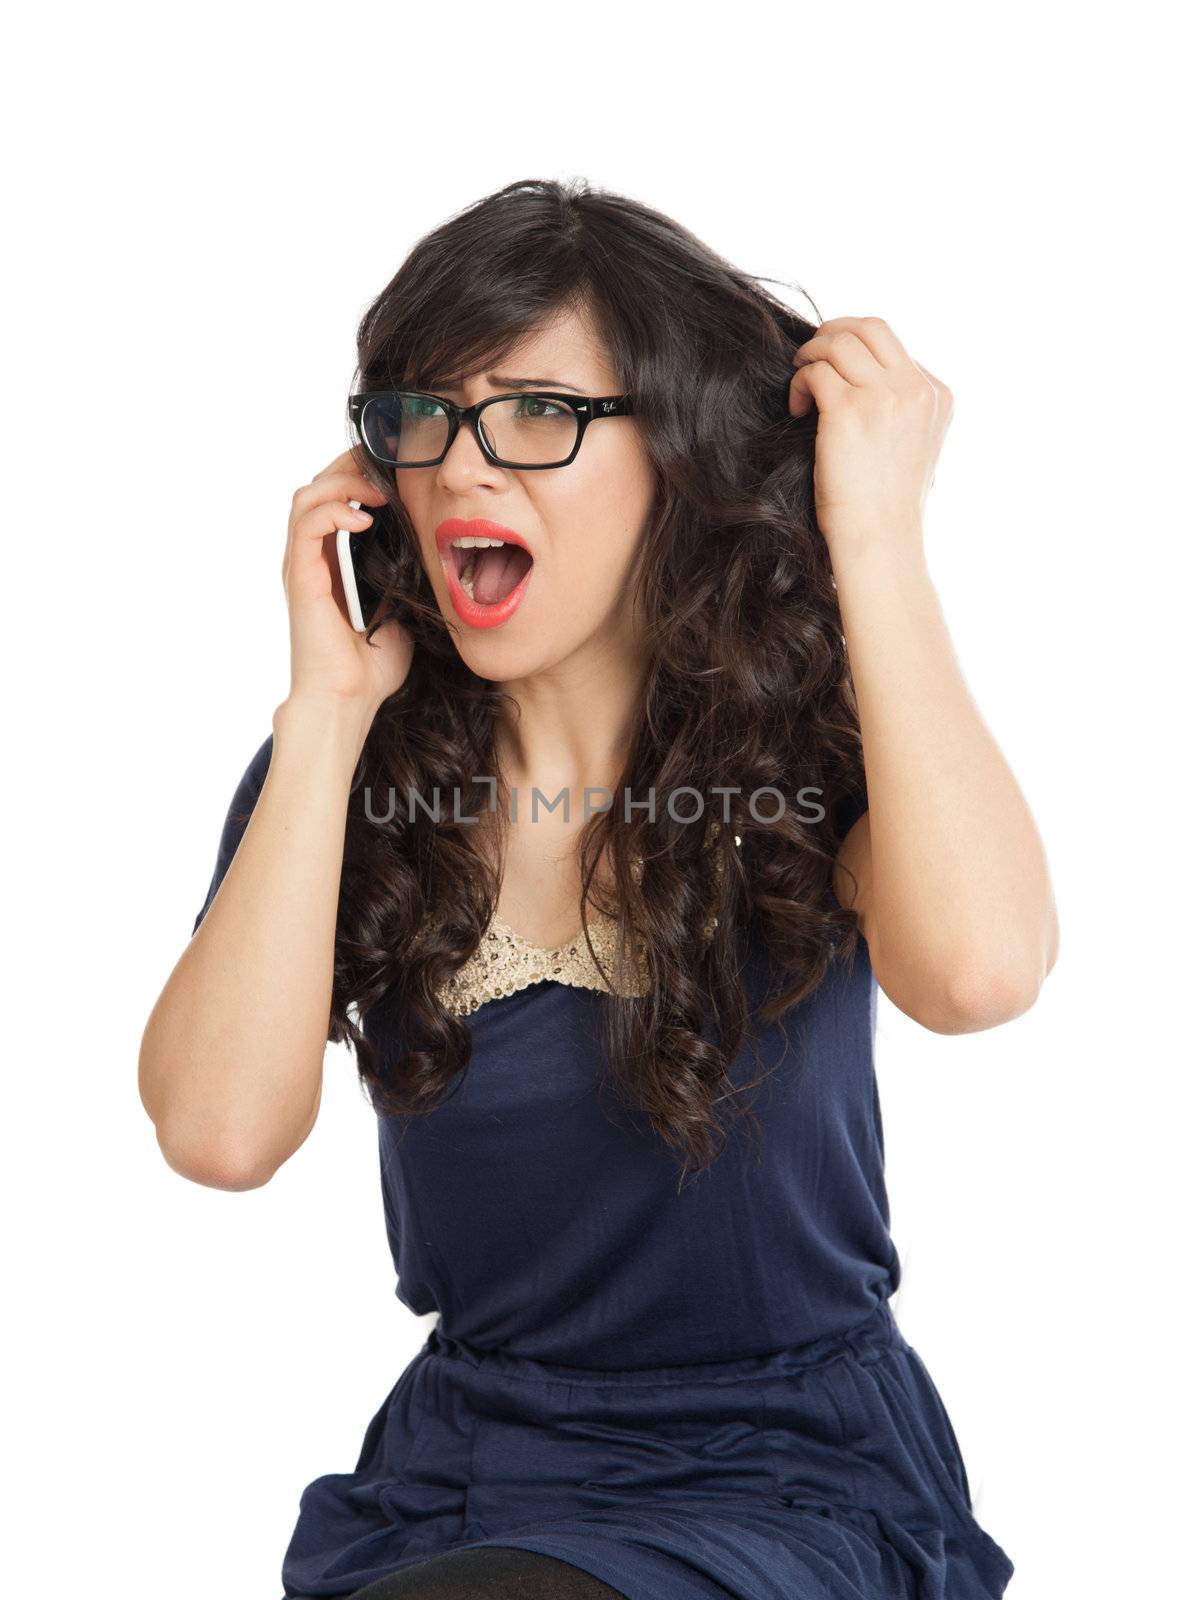 Beautiful woman in glasses shouts displeasure in a mobile phone